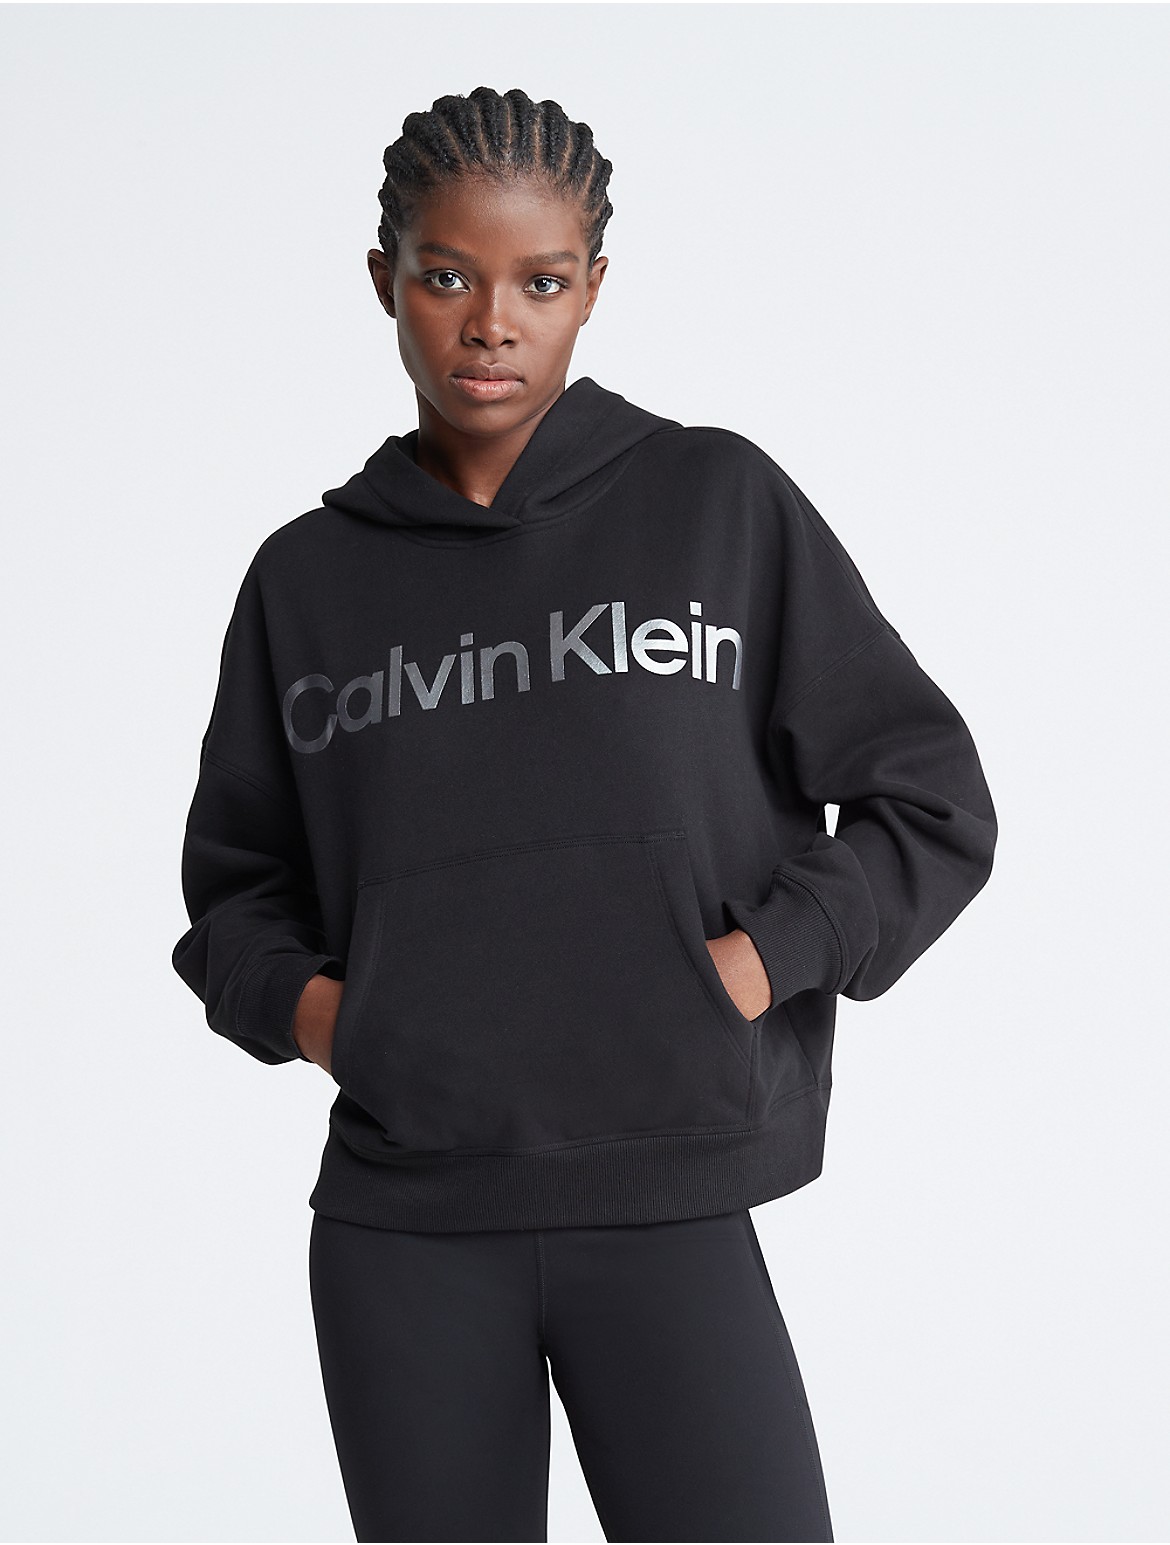 Calvin Klein Women's Metallic Logo Hoodie - Black - L